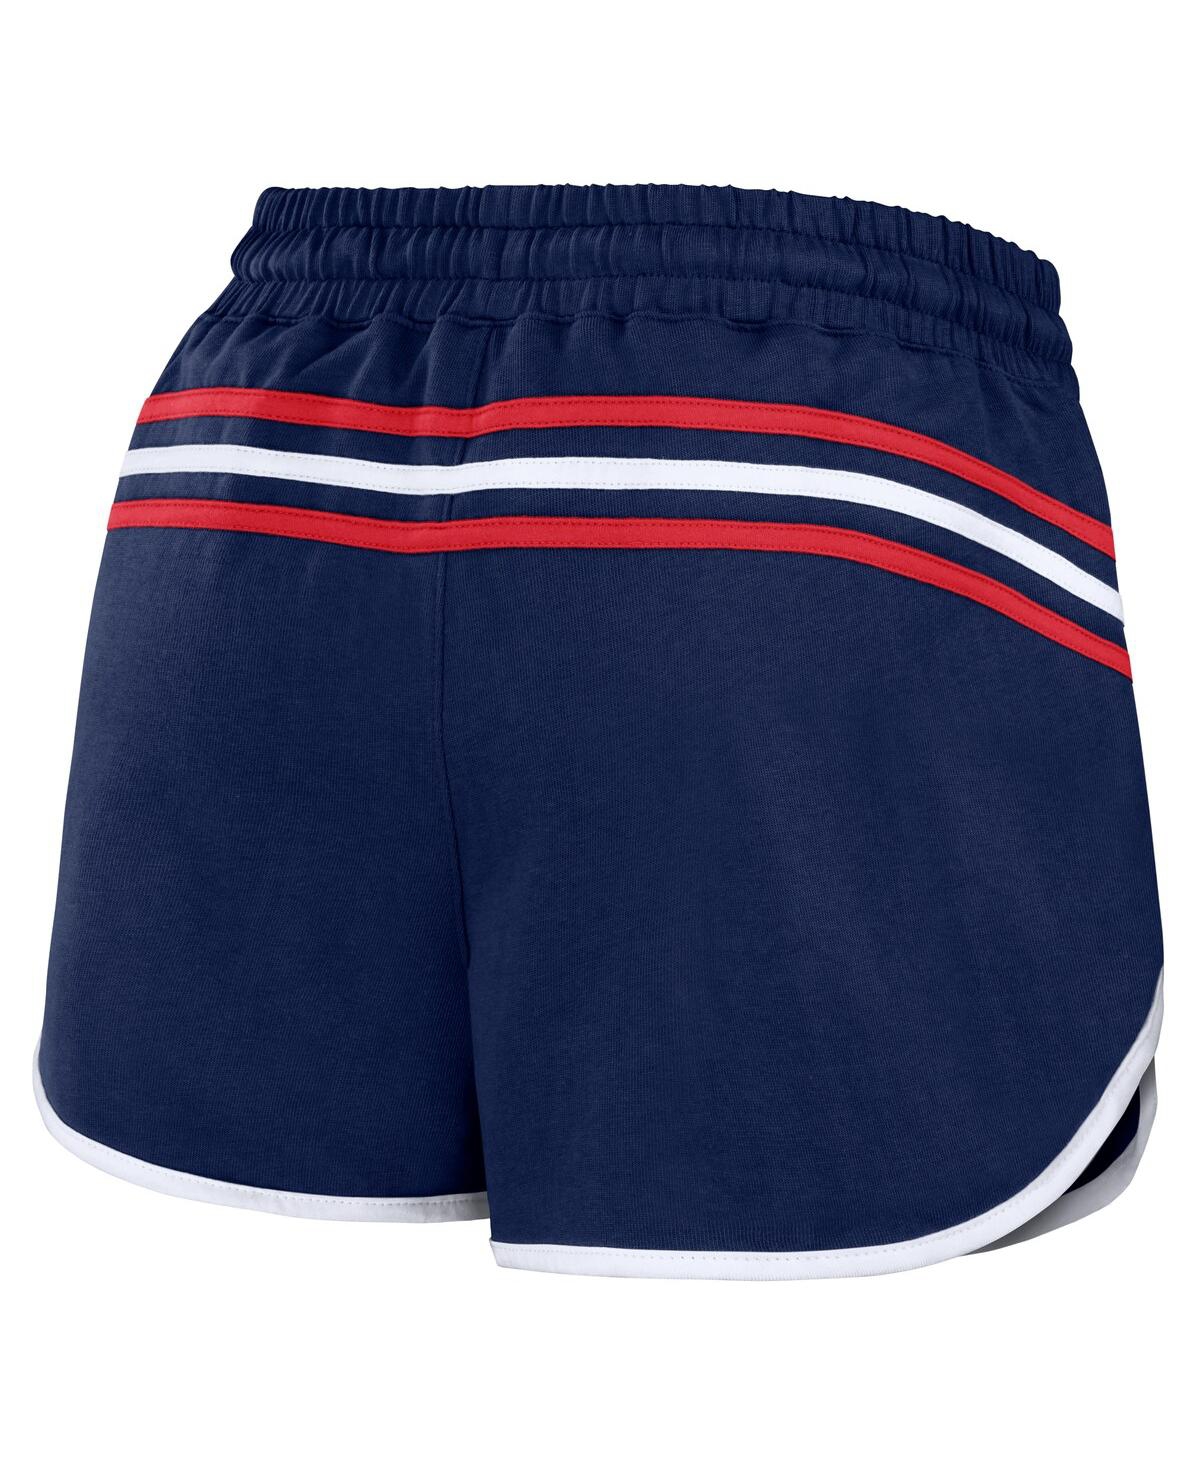 Shop Wear By Erin Andrews Women's  Navy New England Patriots Hem Shorts